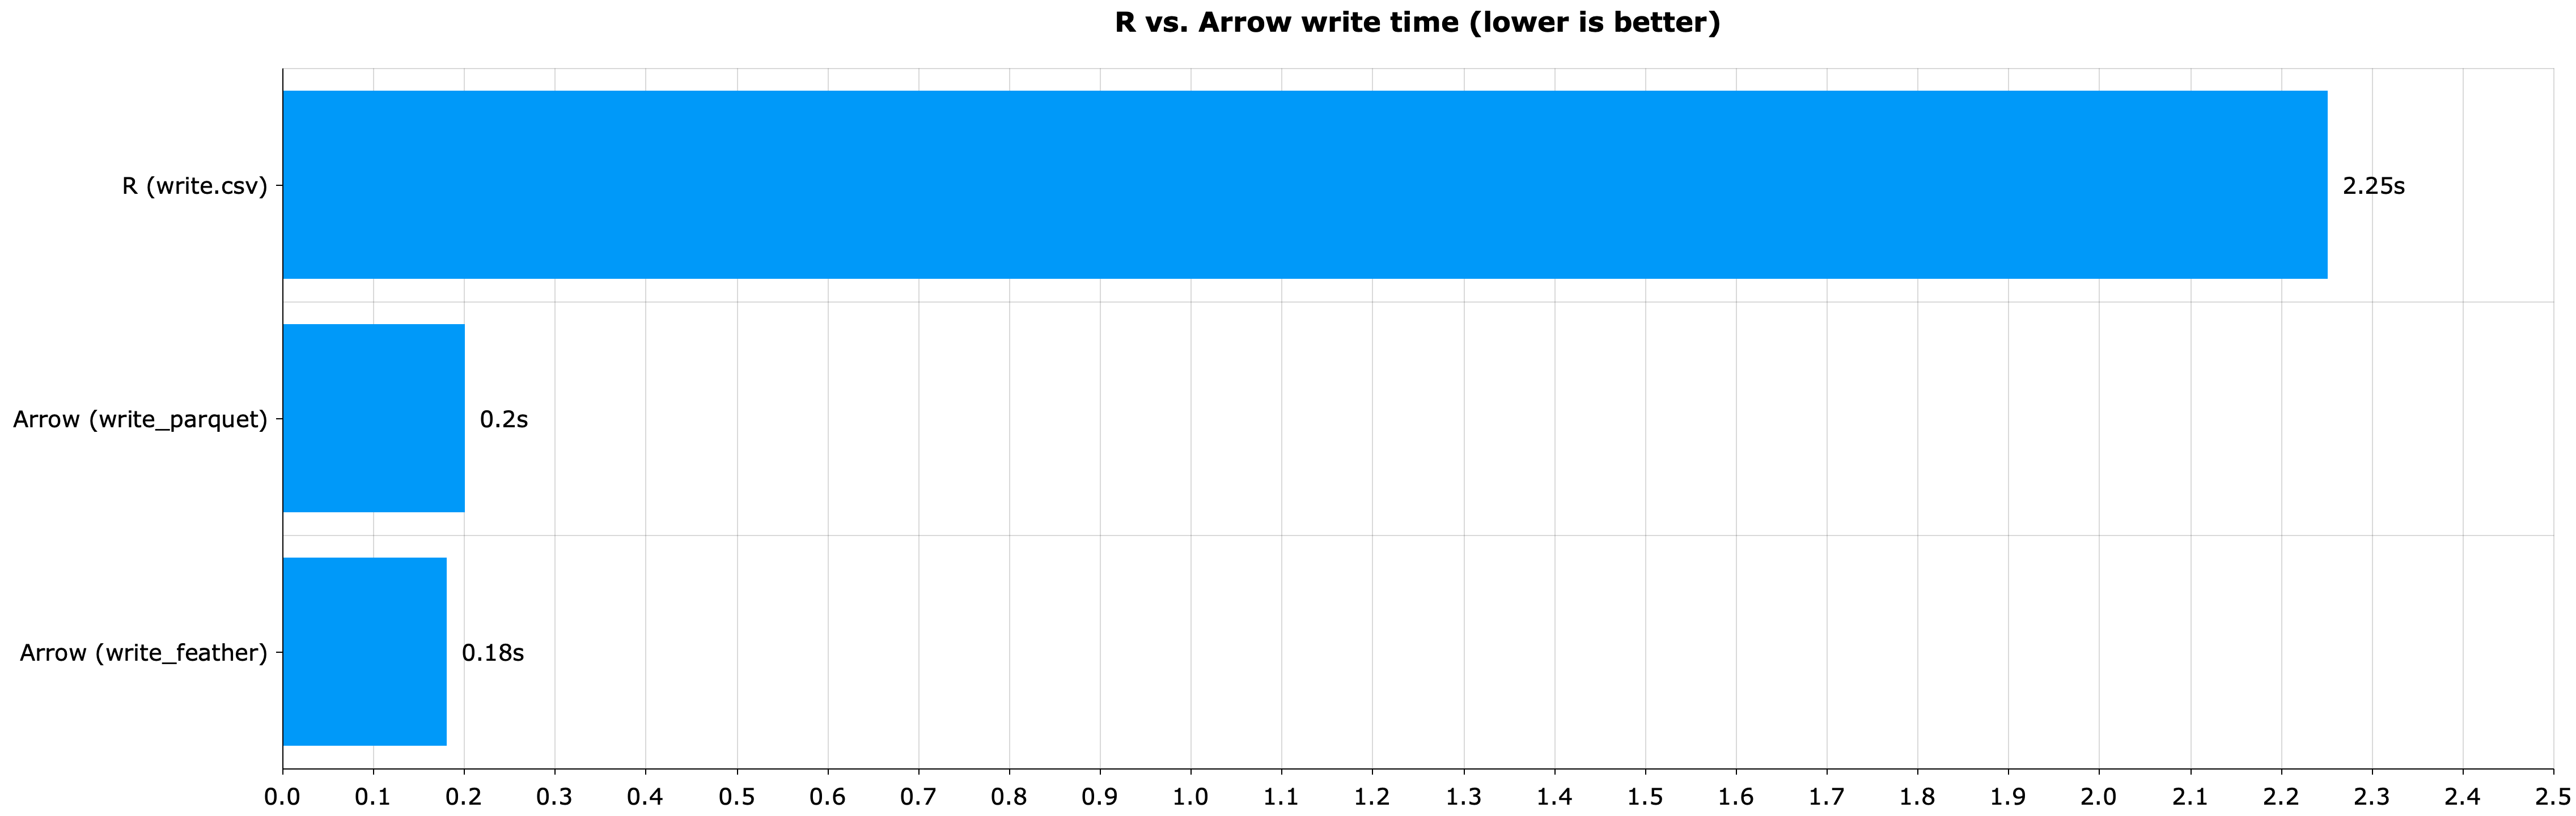 Image 6 - R vs. Apache Arrow in write time (R CSV: 2.25s; Arrow Parquet: 0.2s; Arrow Feather: 0.18s)